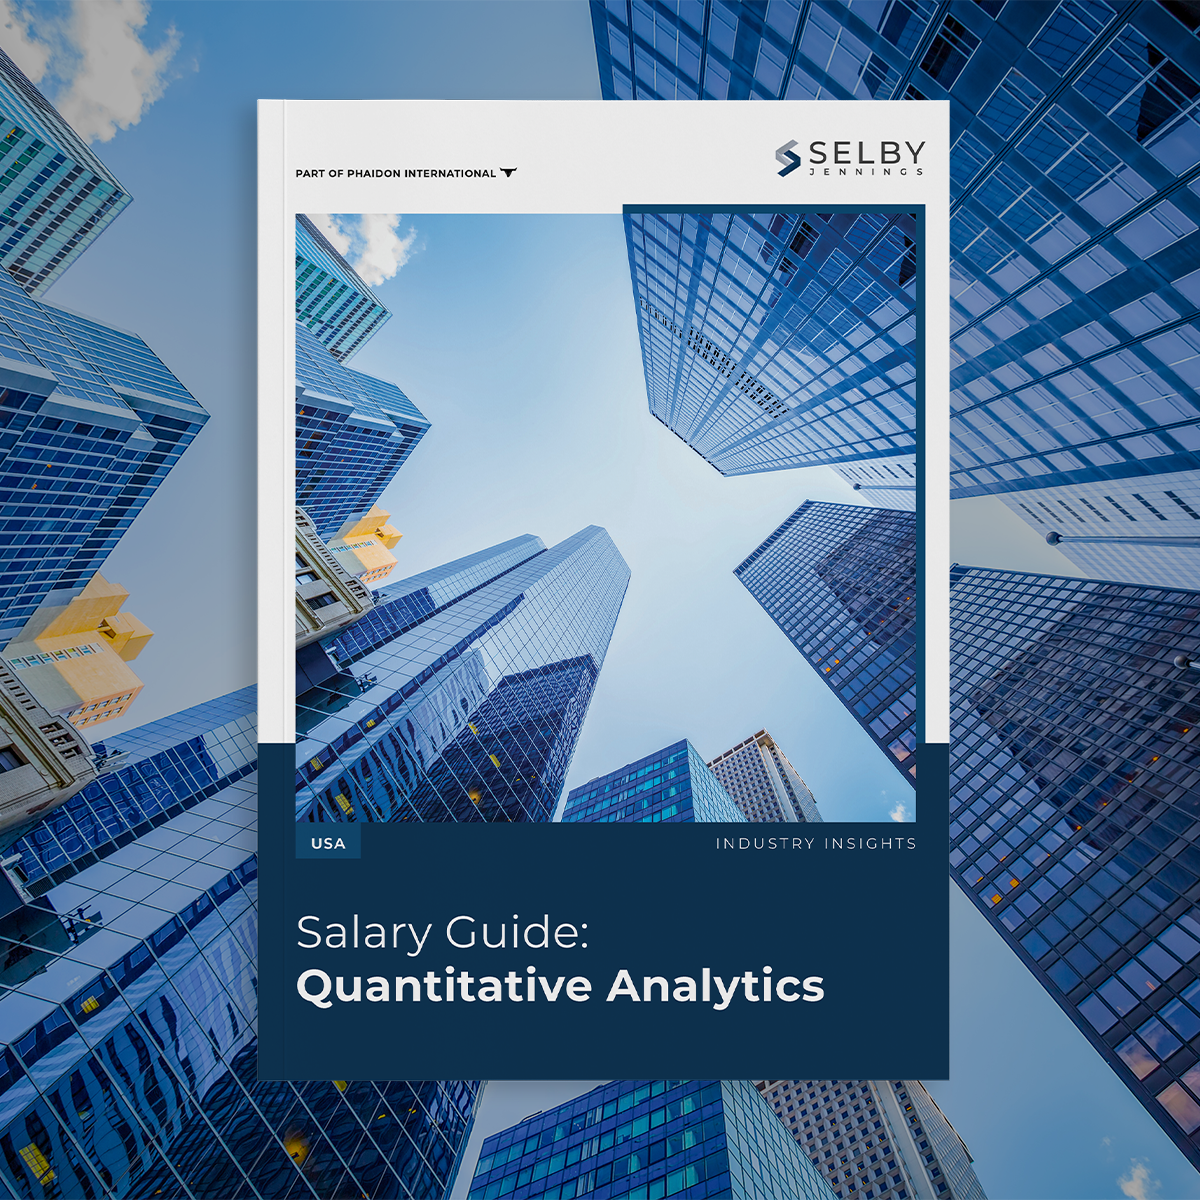 Quantitative Analytics Salary Guide USA Image